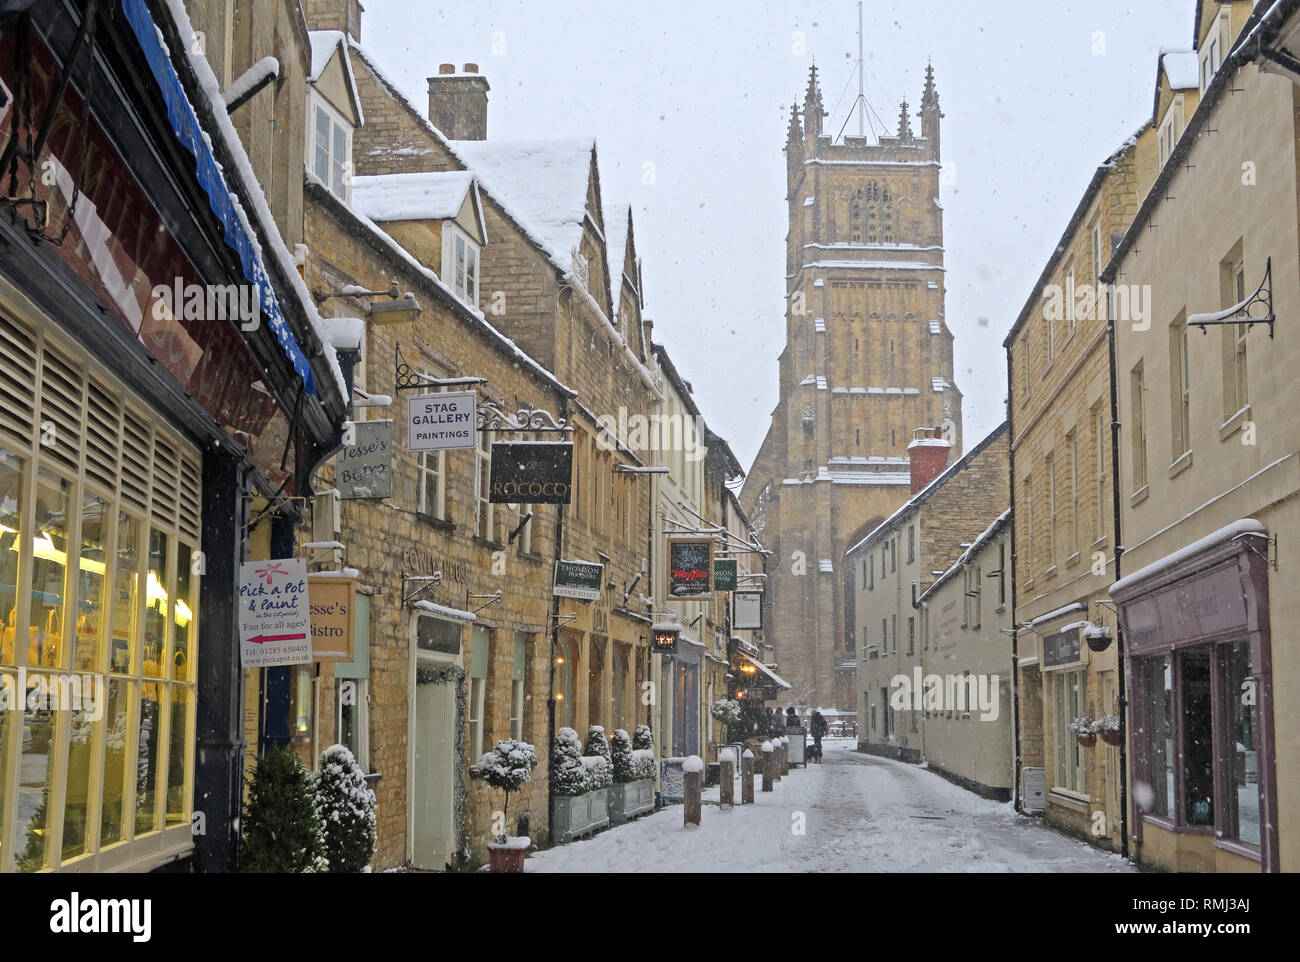 View up Black Jack Street, Octavias Bookshop, to Church of St. John Baptist, winter snow Cirencester town centre, Gloucestershire, England, GL7 2AA Stock Photo